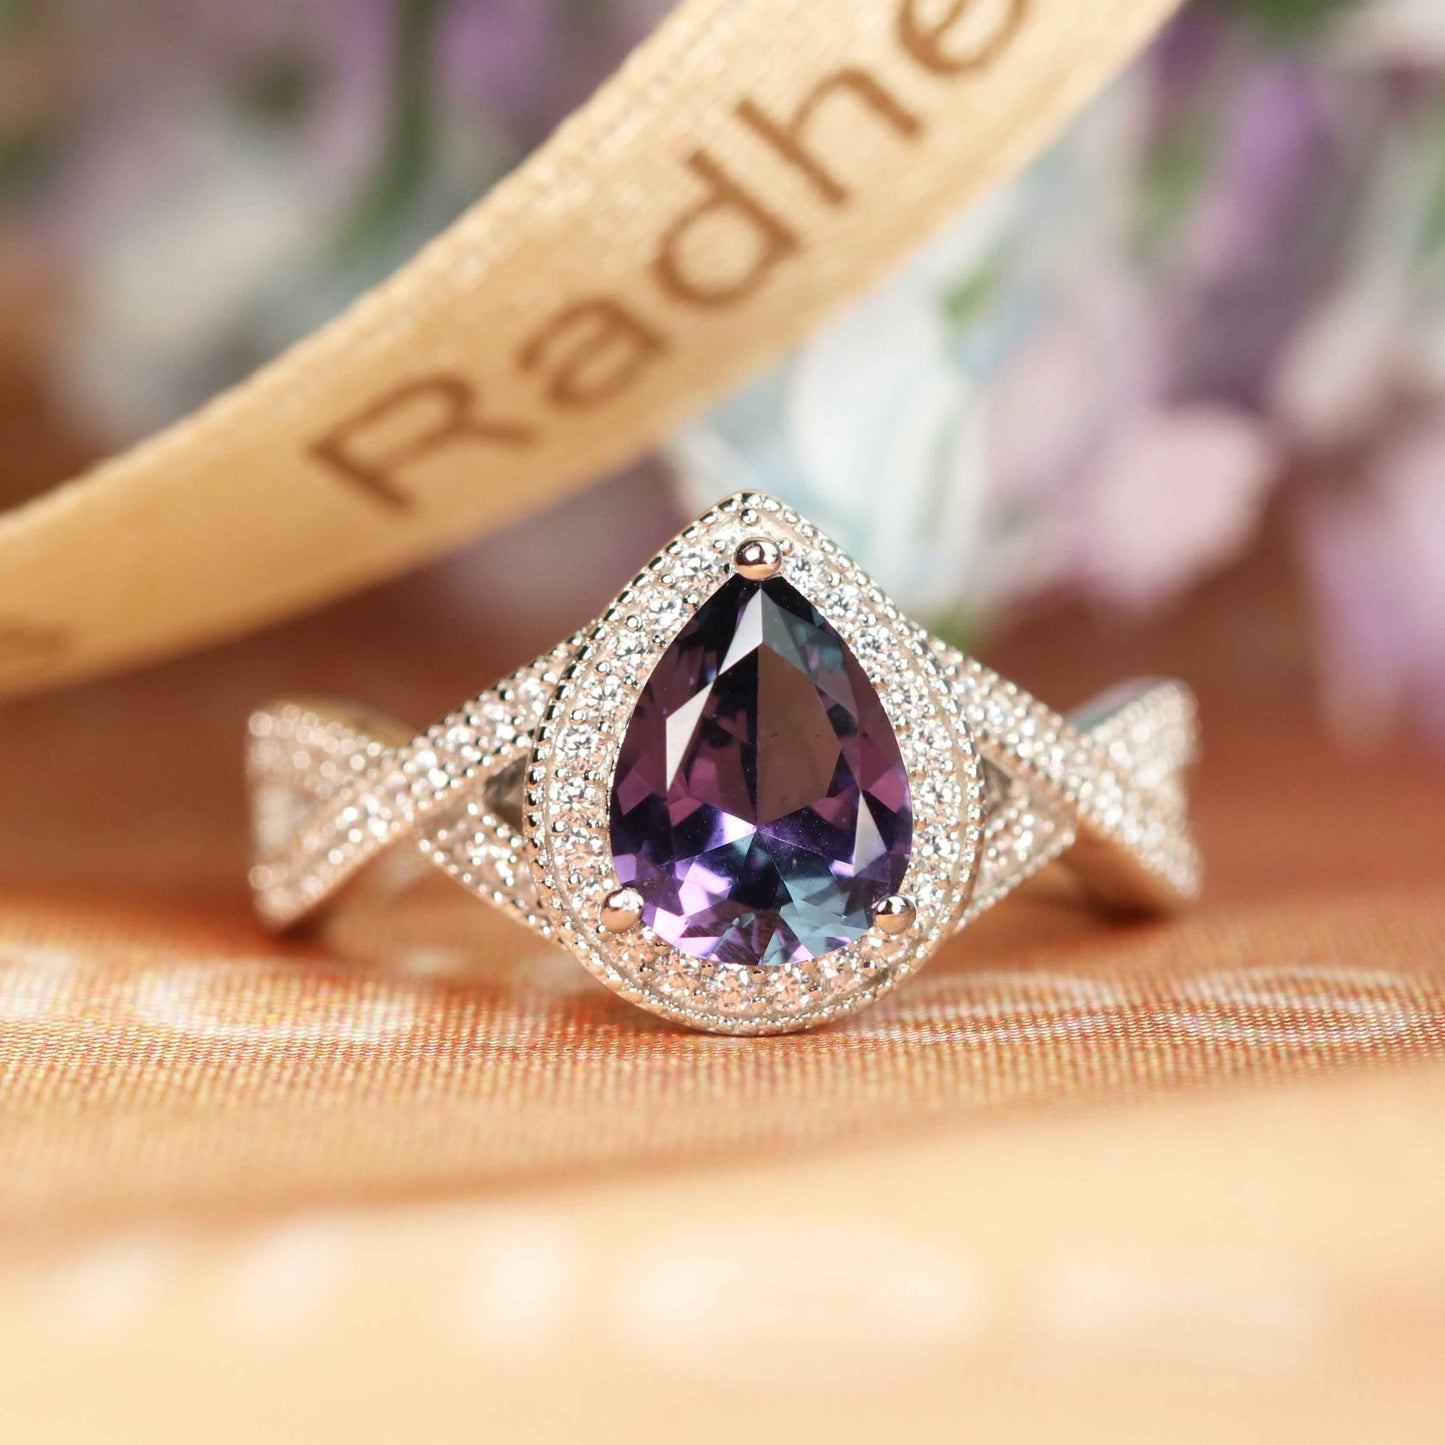 Imposing 1.5 carat Pear Shaped Alexandrite Diamond Pave Twist Shank Milgrain Statement Ring in White Gold